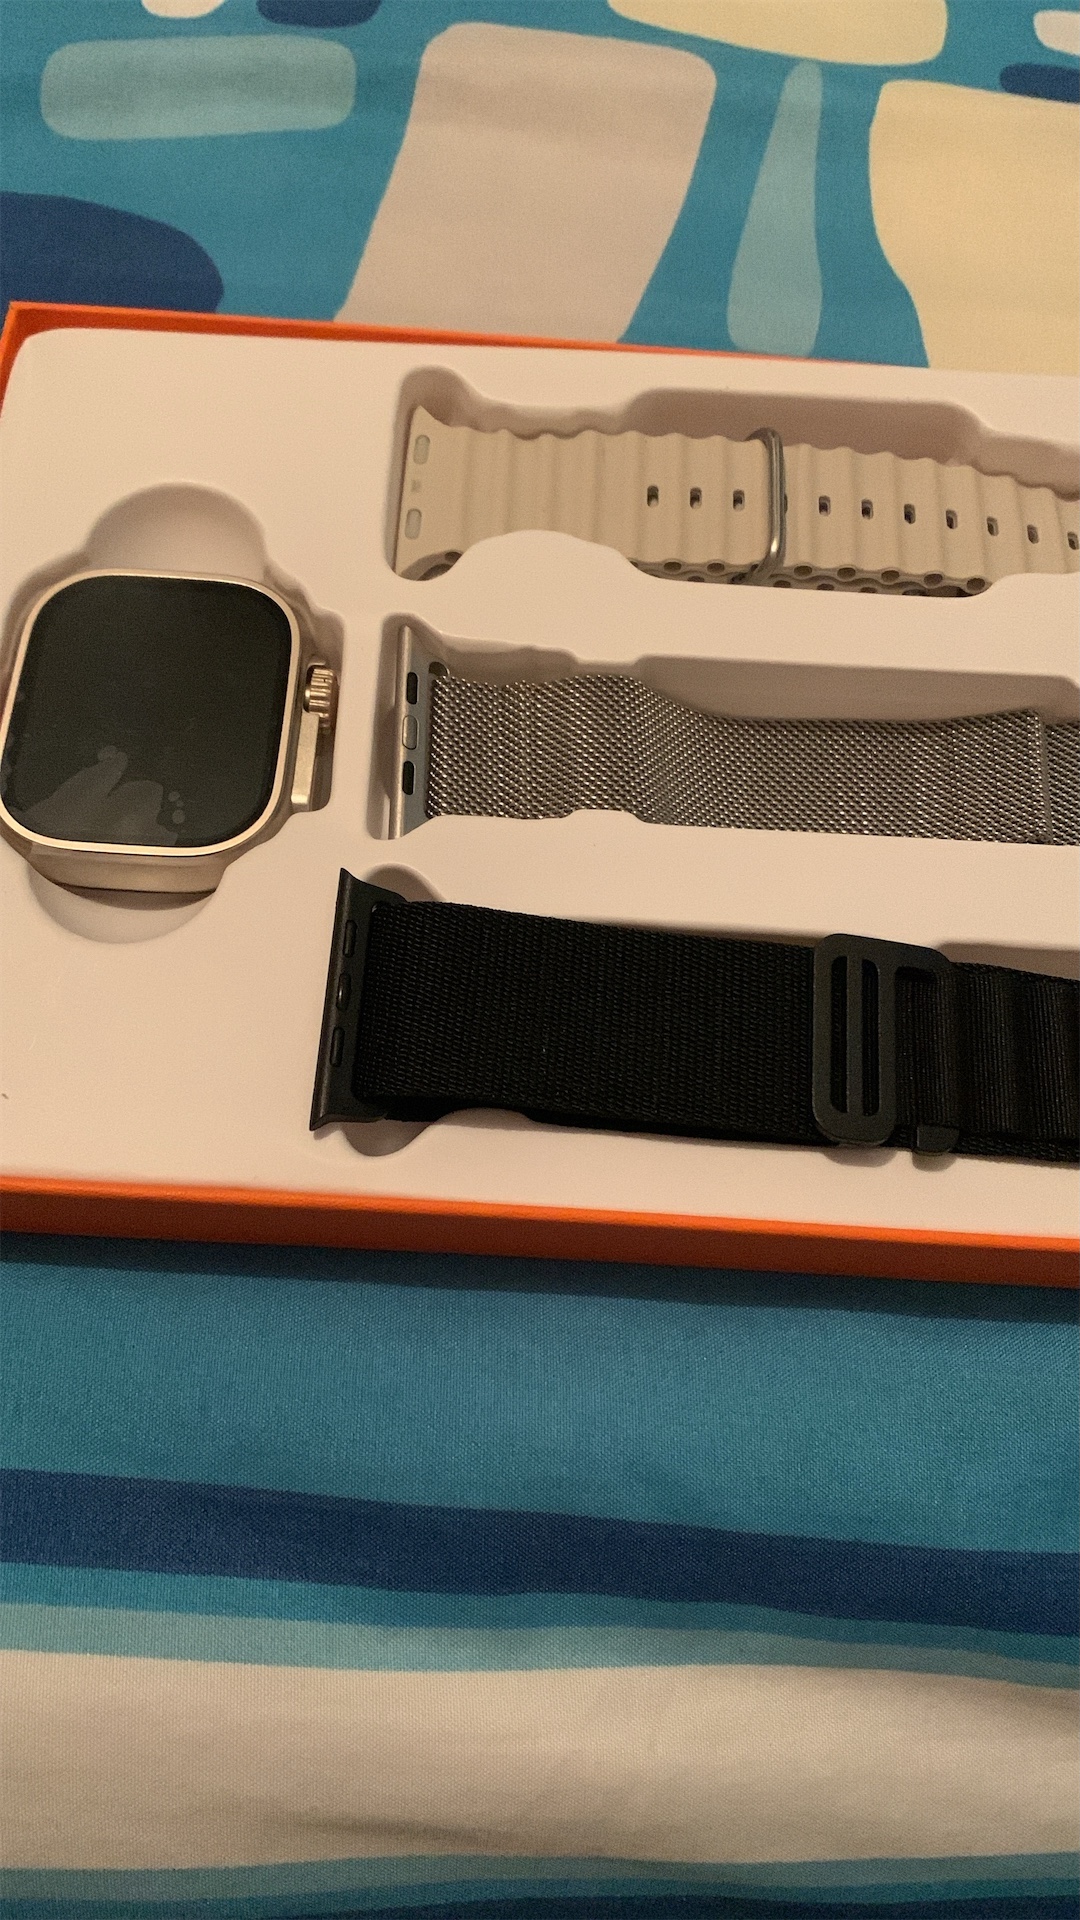 accesorios para electronica - Reloj inteligente s9 ultra smart Watch 